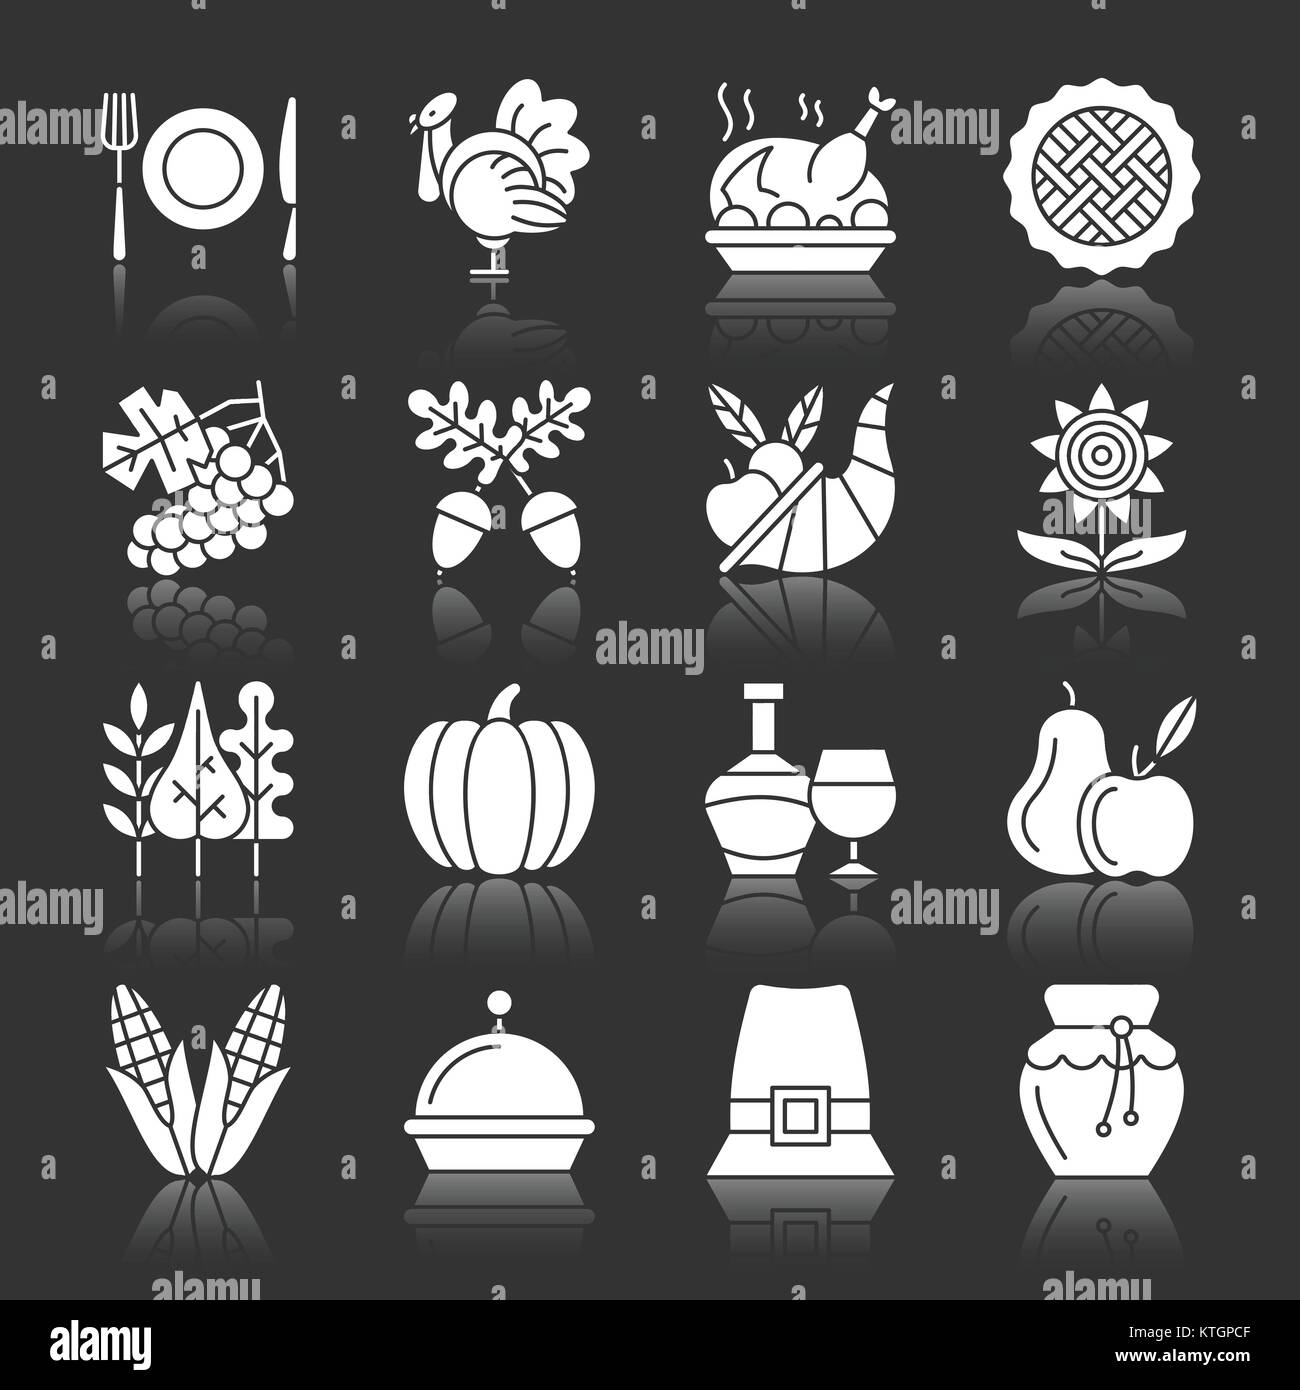 Thanksgiving day white silhouette with reflection icon set. Monochrome flat design symbol collection. Pumpkin, cornucopia, turkey, vegetables, holiday Stock Vector